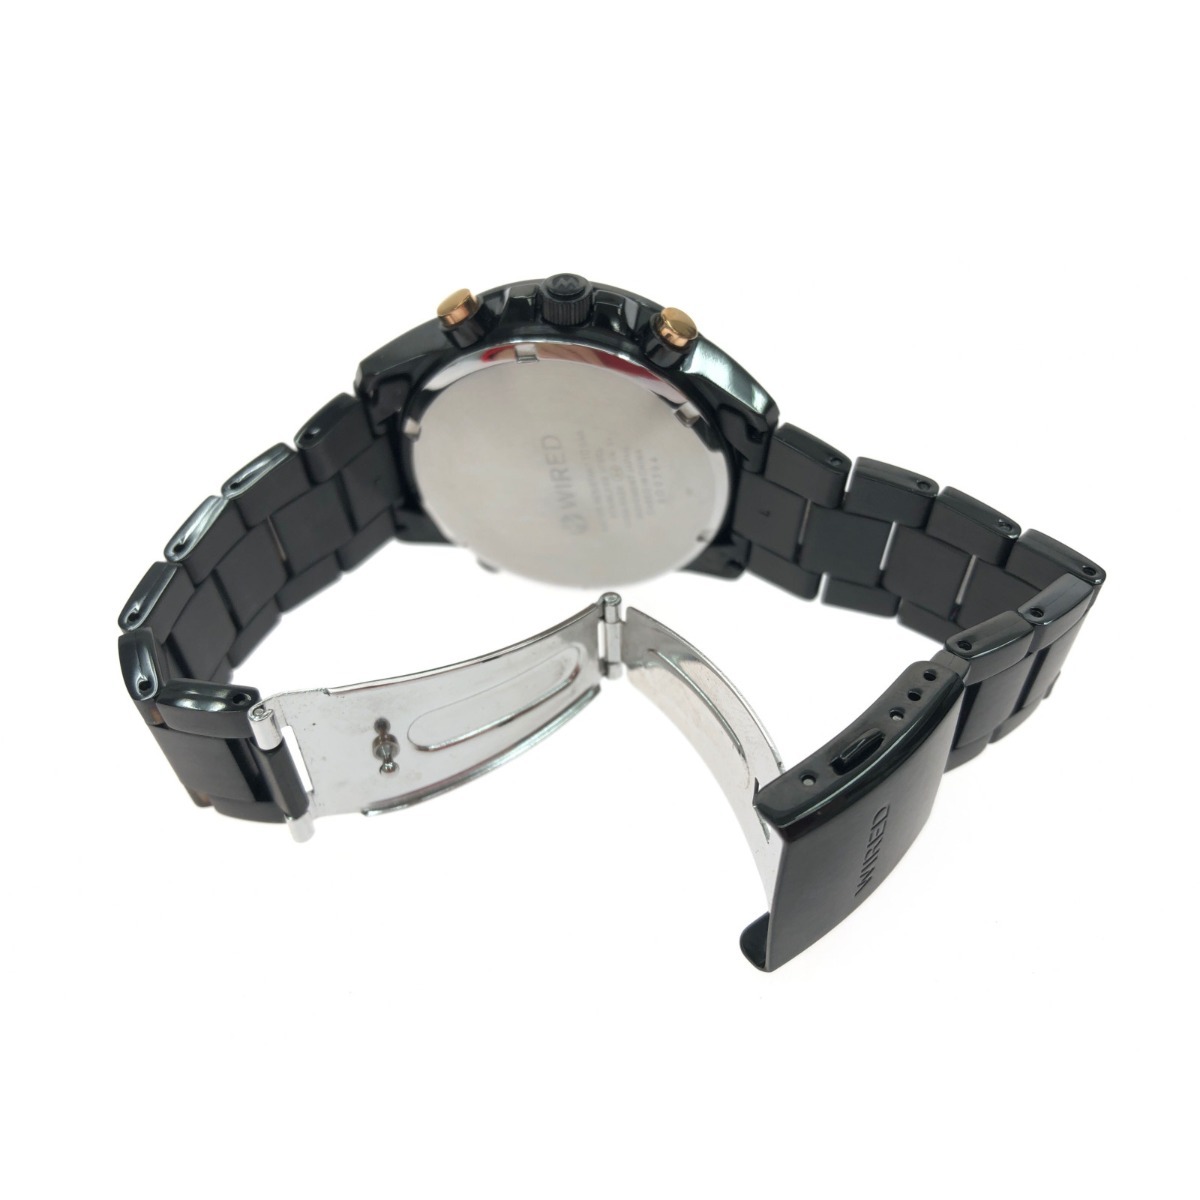 VV SEIKO Seiko мужские наручные часы кварц хронограф VK68-KX20 черный заметная царапина . загрязнения нет 